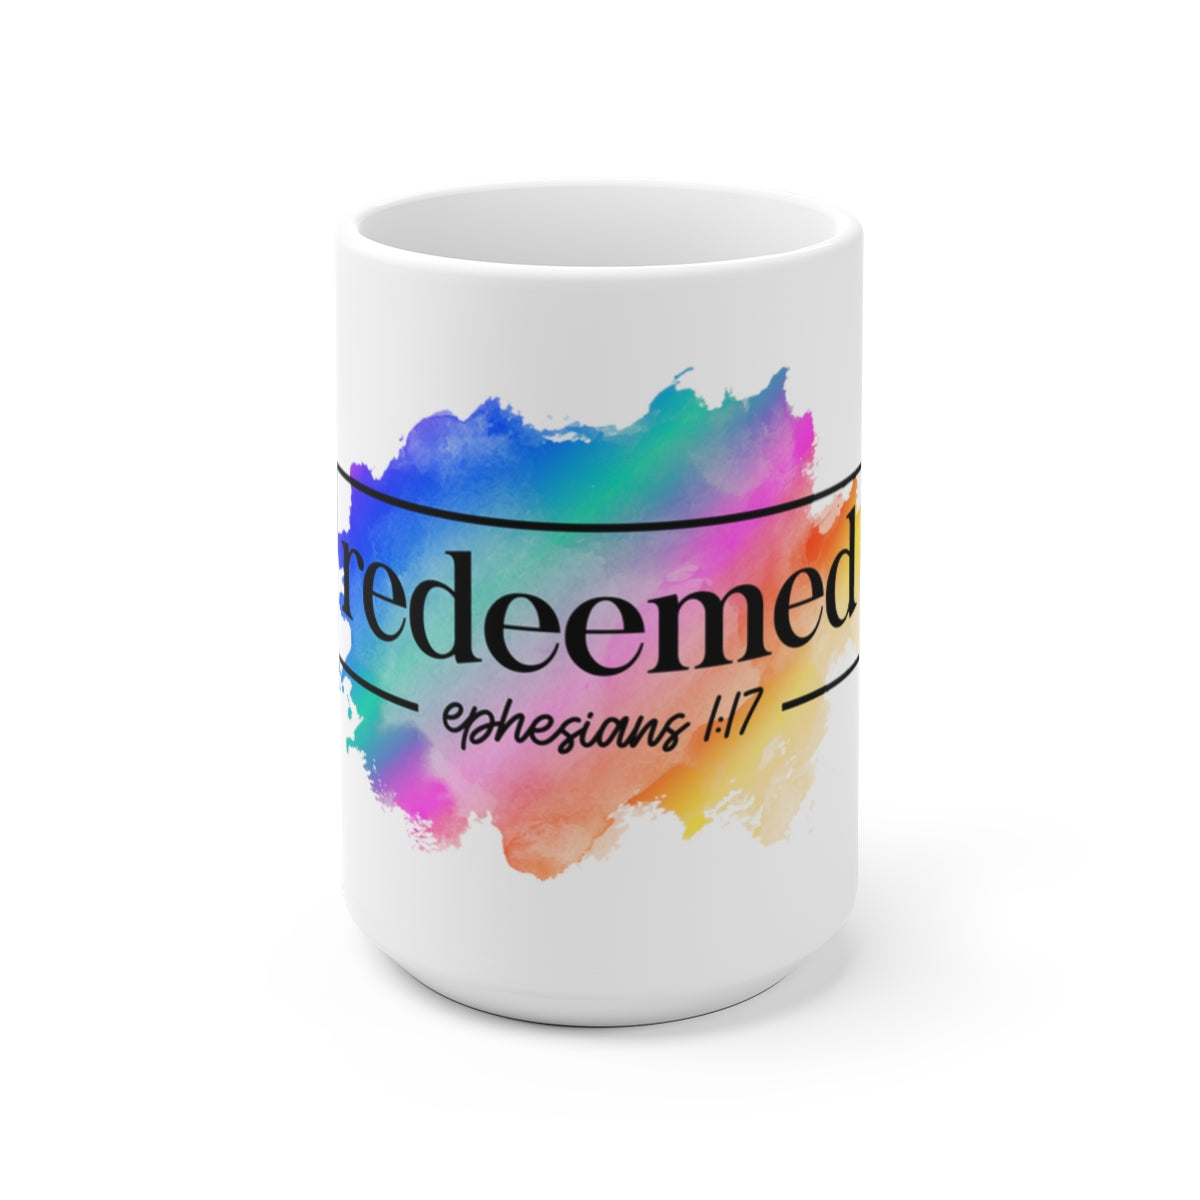 Redeemed (Ephesians 1:17) Set (Coffee mug & Journal)